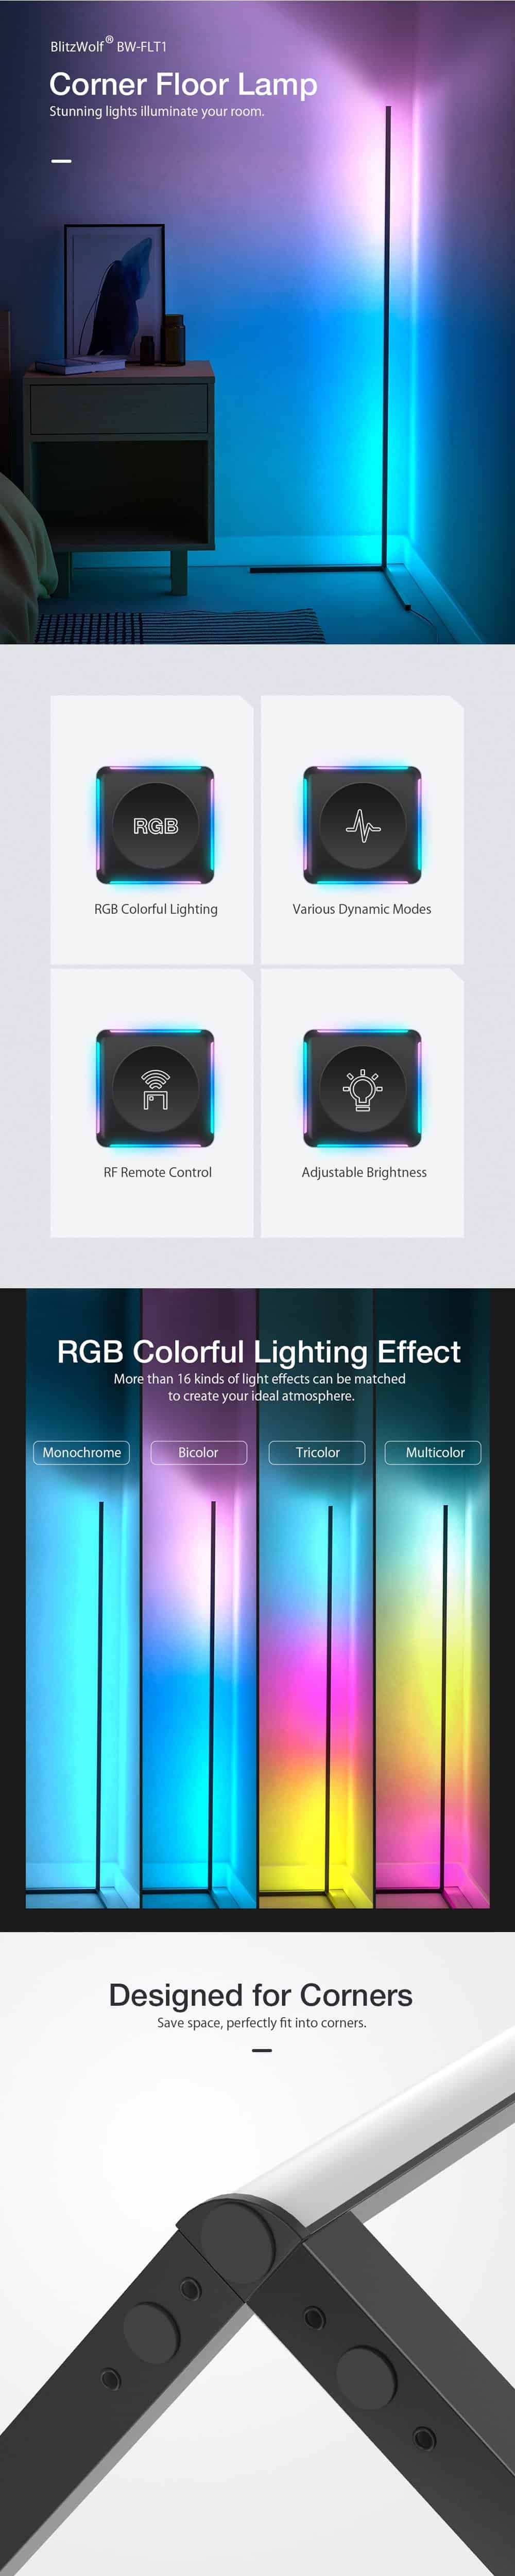 BlitzWolf BW FLT1 Corner Floor Lamp with RGB Colorful Lighting Effect 5